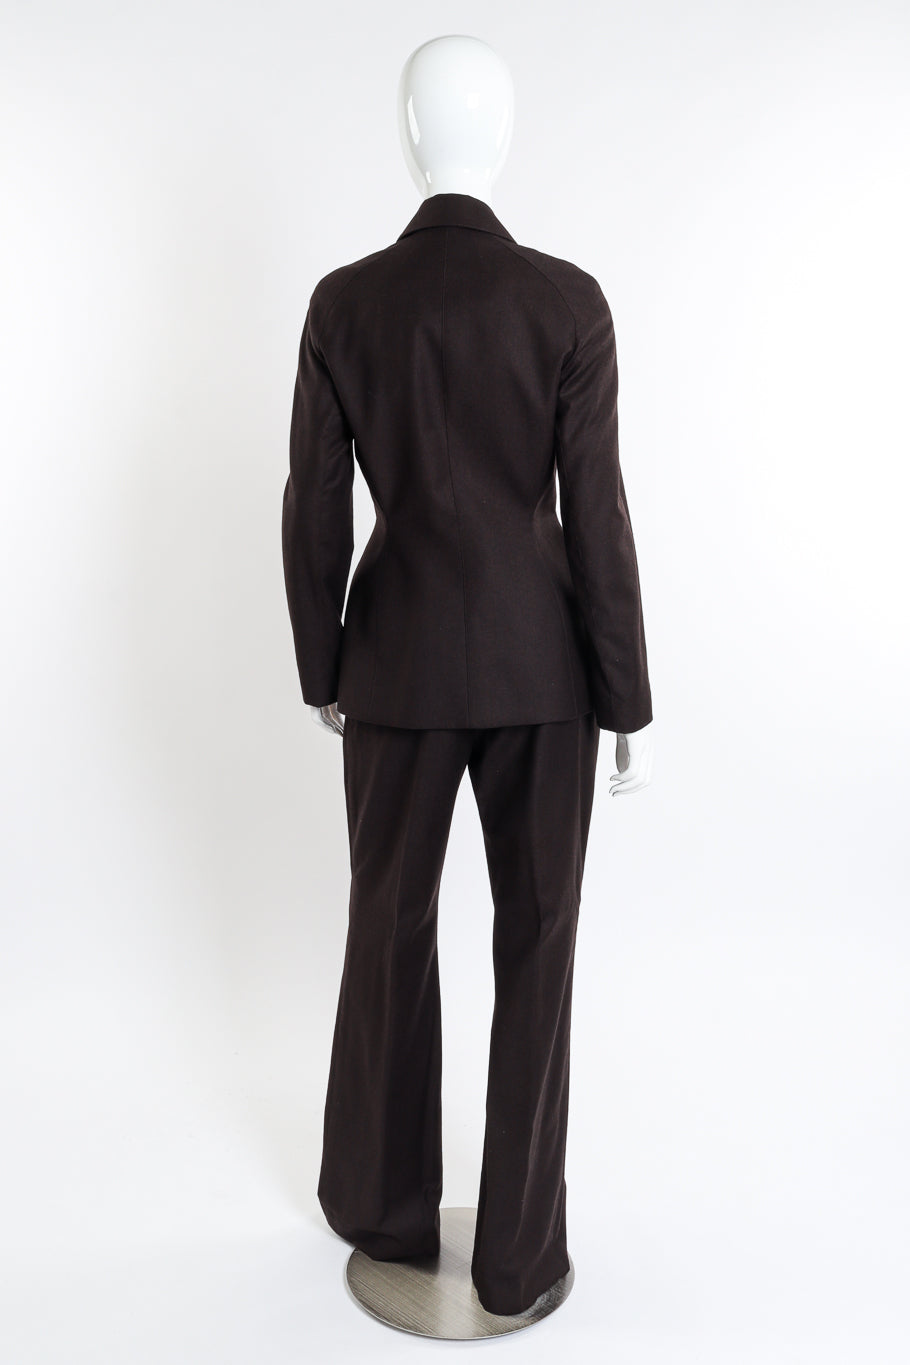 Vintage Thierry Mugler Sculpted Pantsuit back on mannequin @recessla